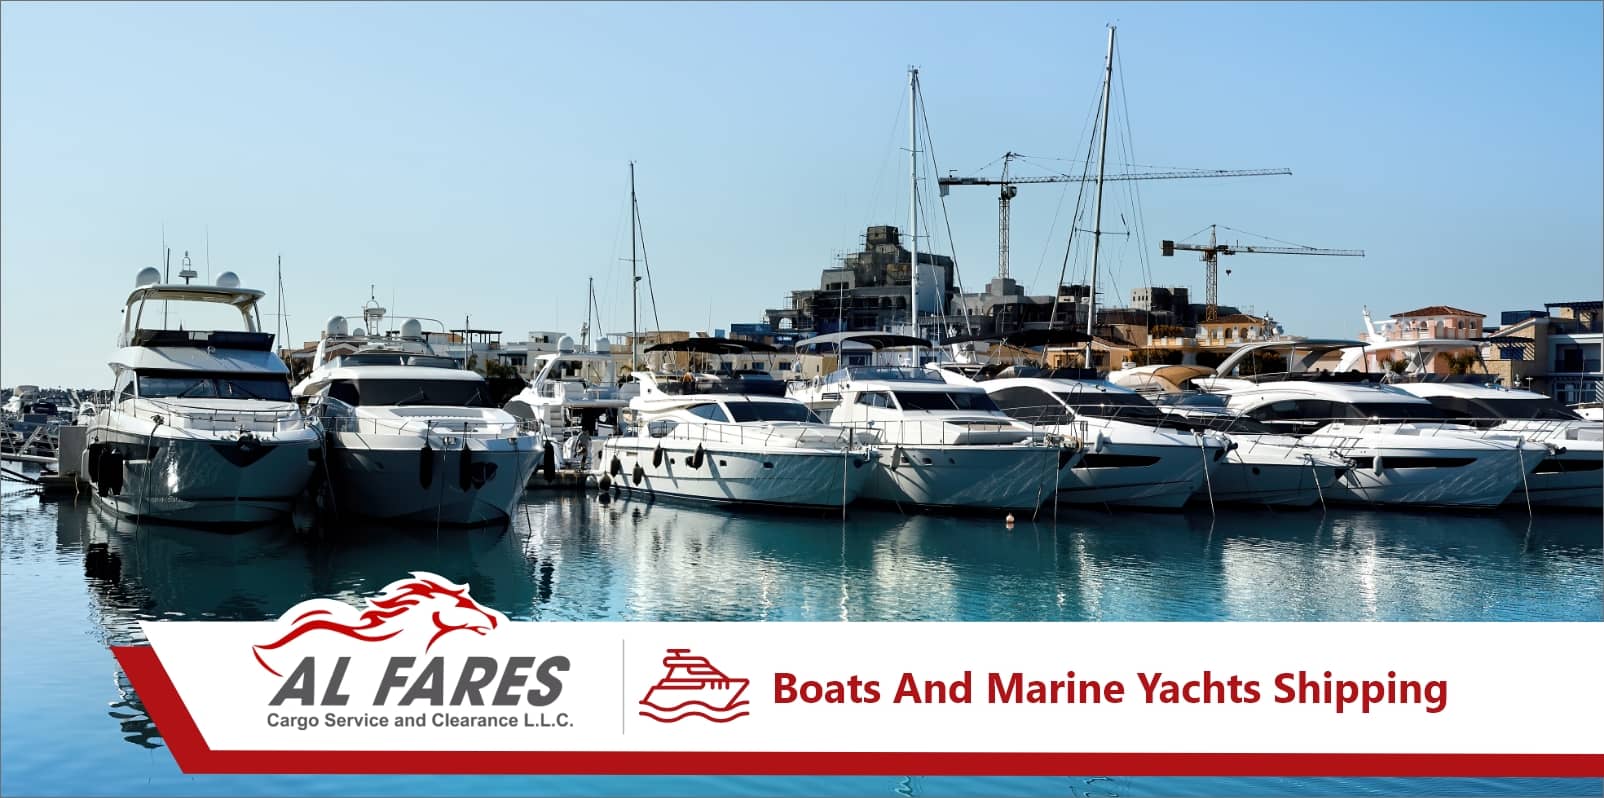 Boats and Marine Yachts Shipping